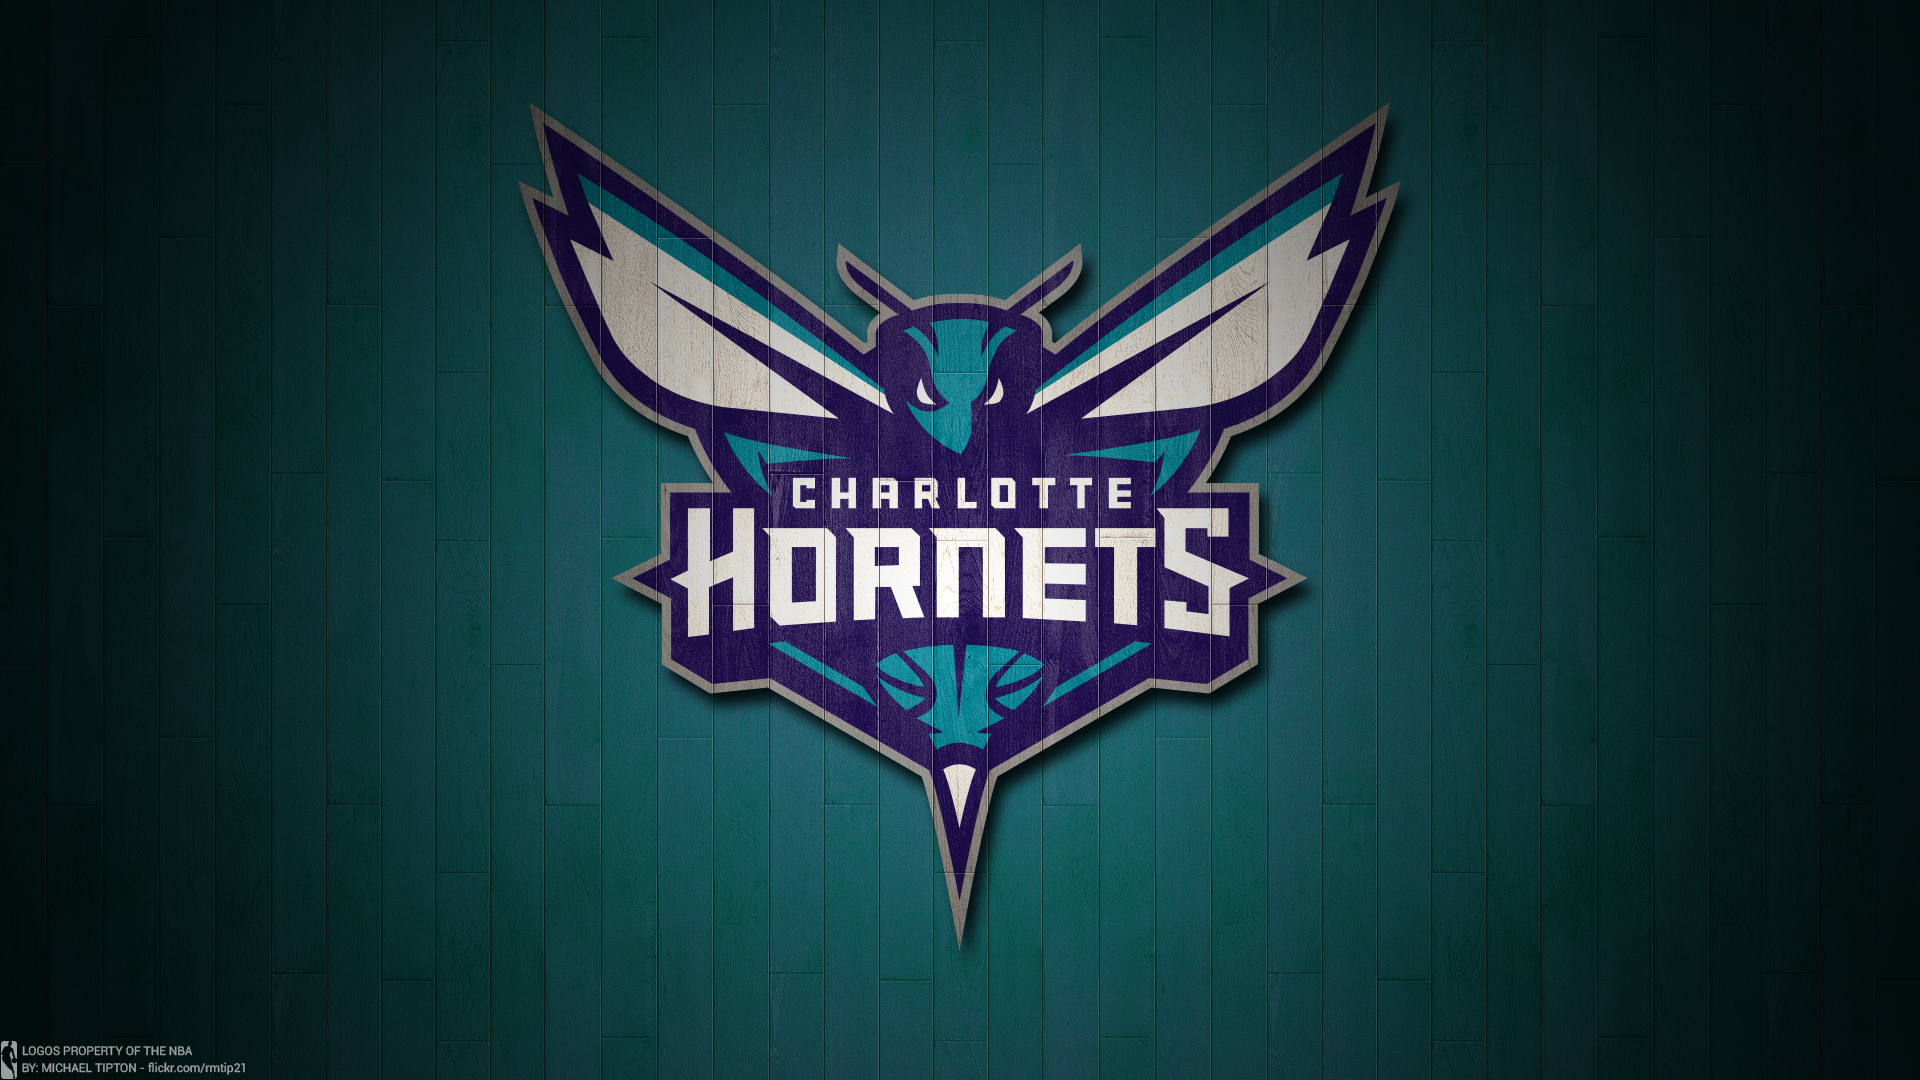 Charlotte Hornets 4K Wallpaper APK for Android Download